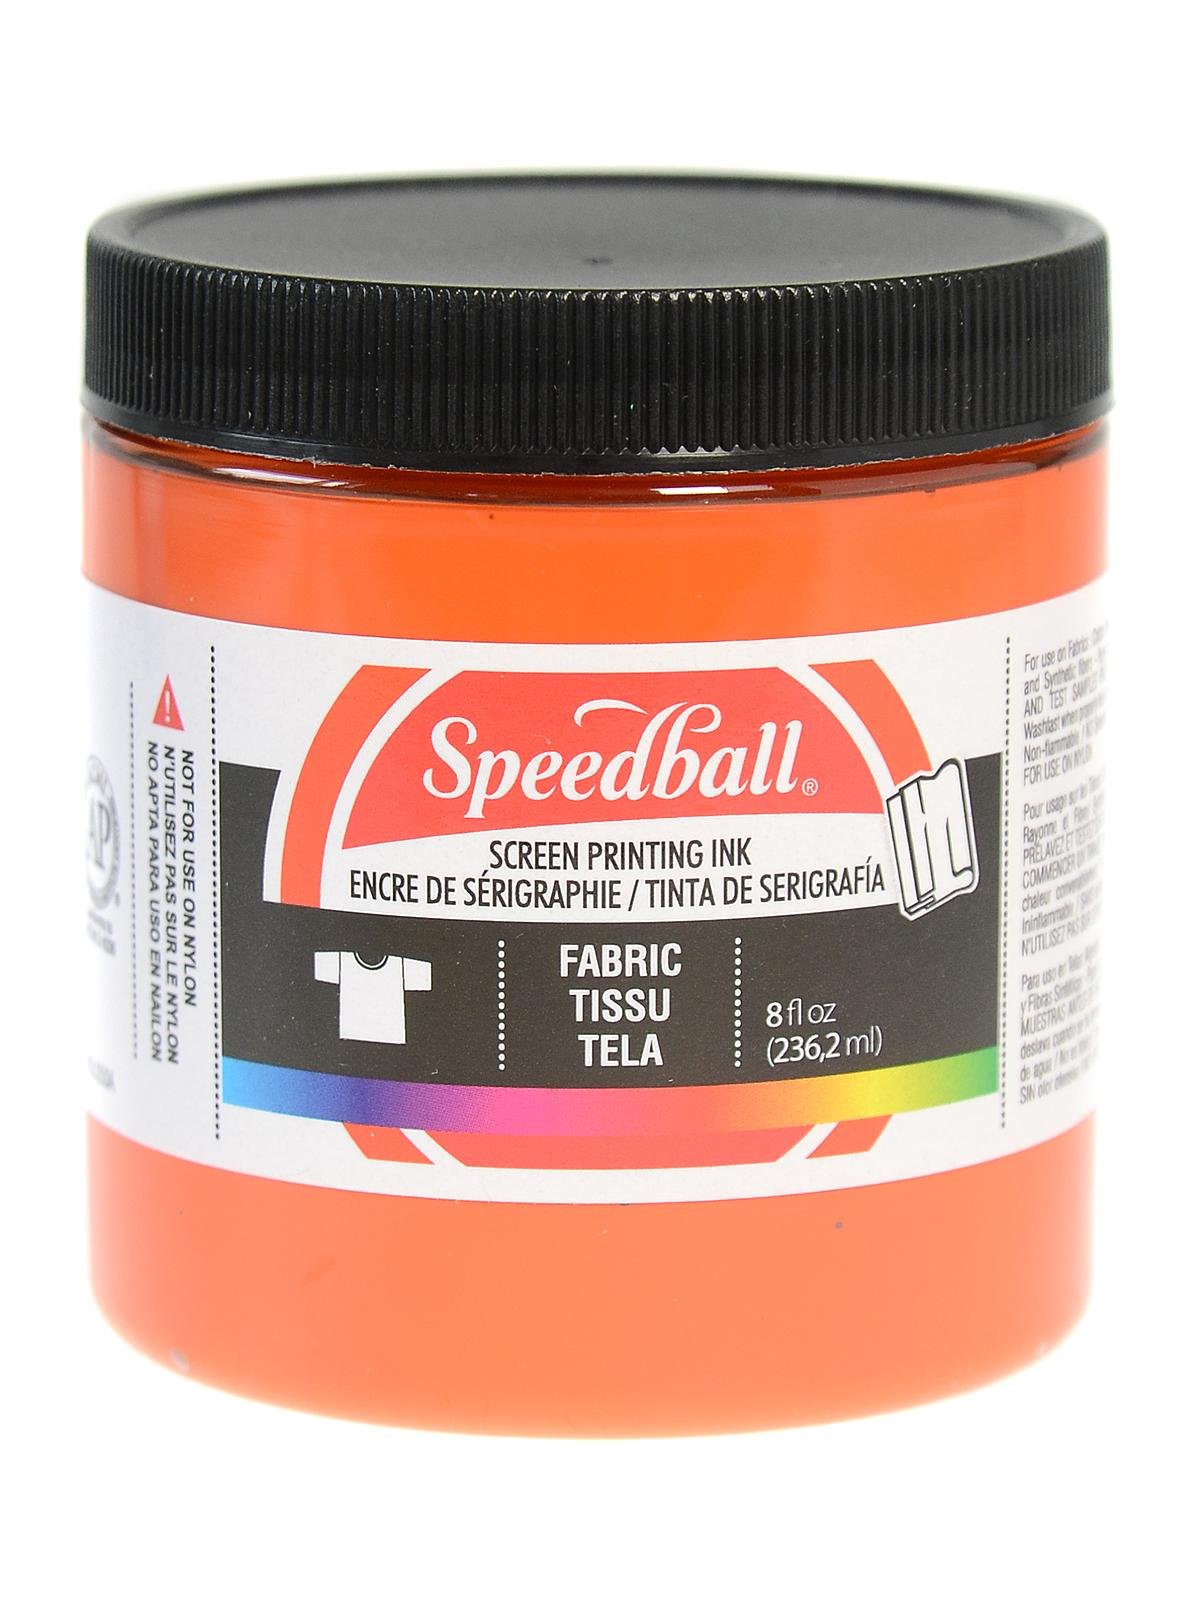 Speedball Fabric Screen Printing Ink 8 oz Jar - Orange